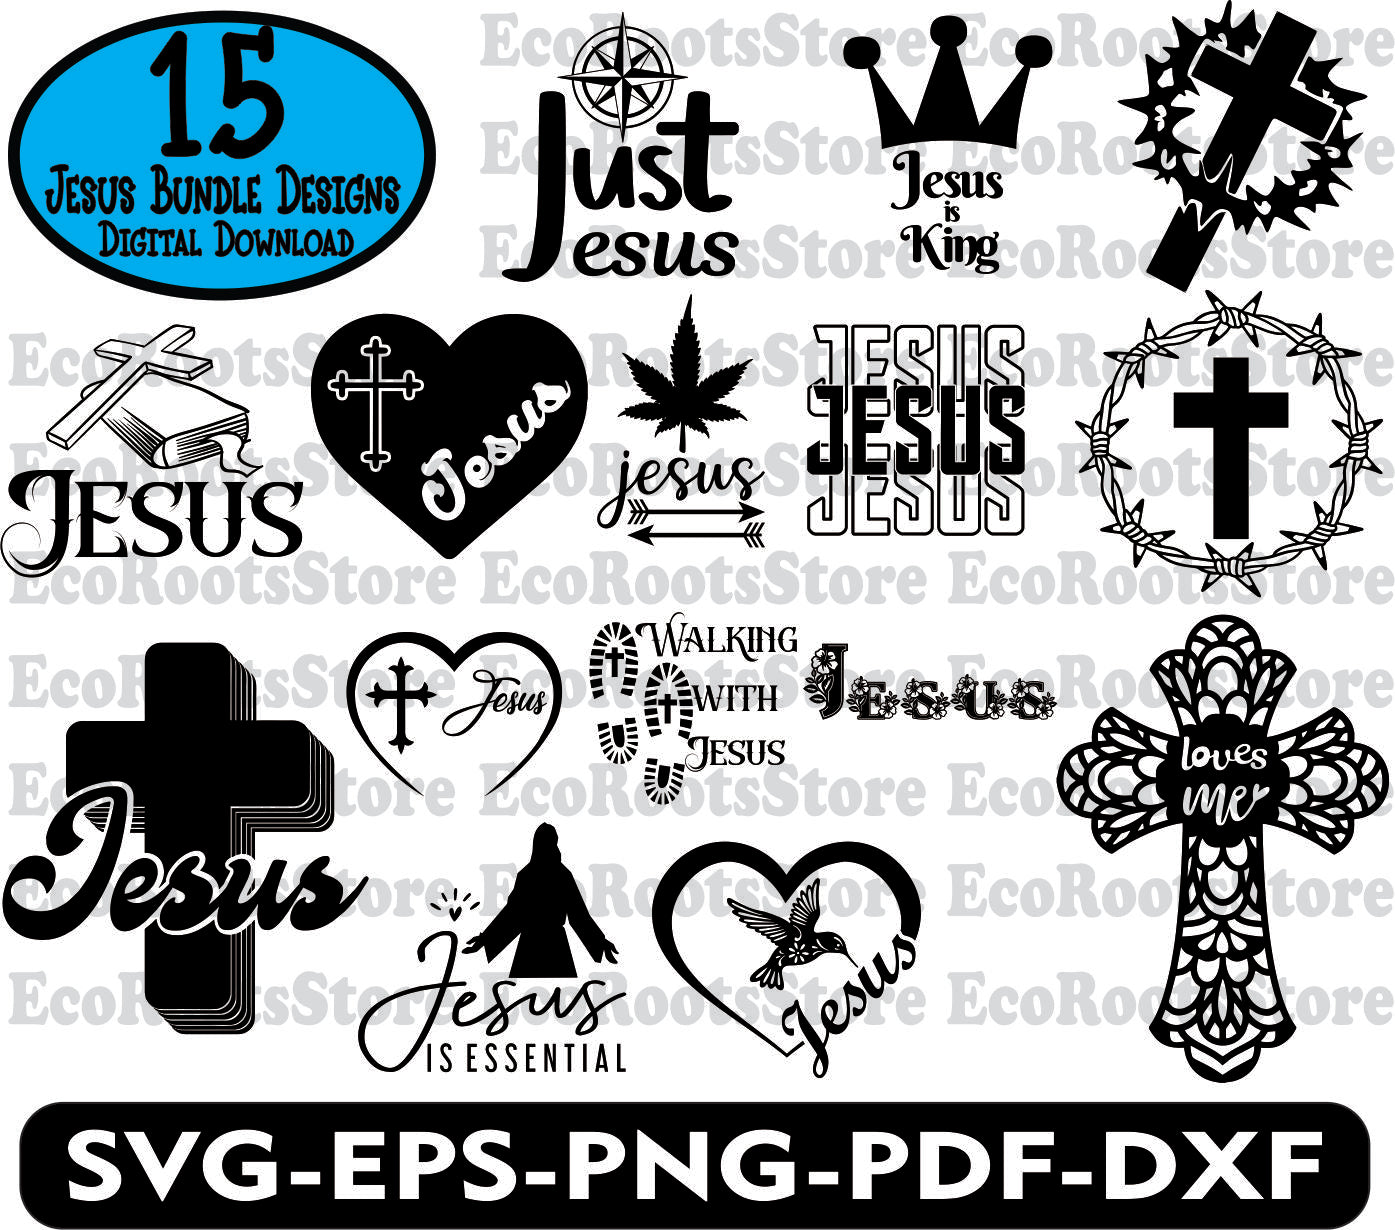 Jesus Bundle Pack Designs SVG EPS PNG PDF DXF Cutting File